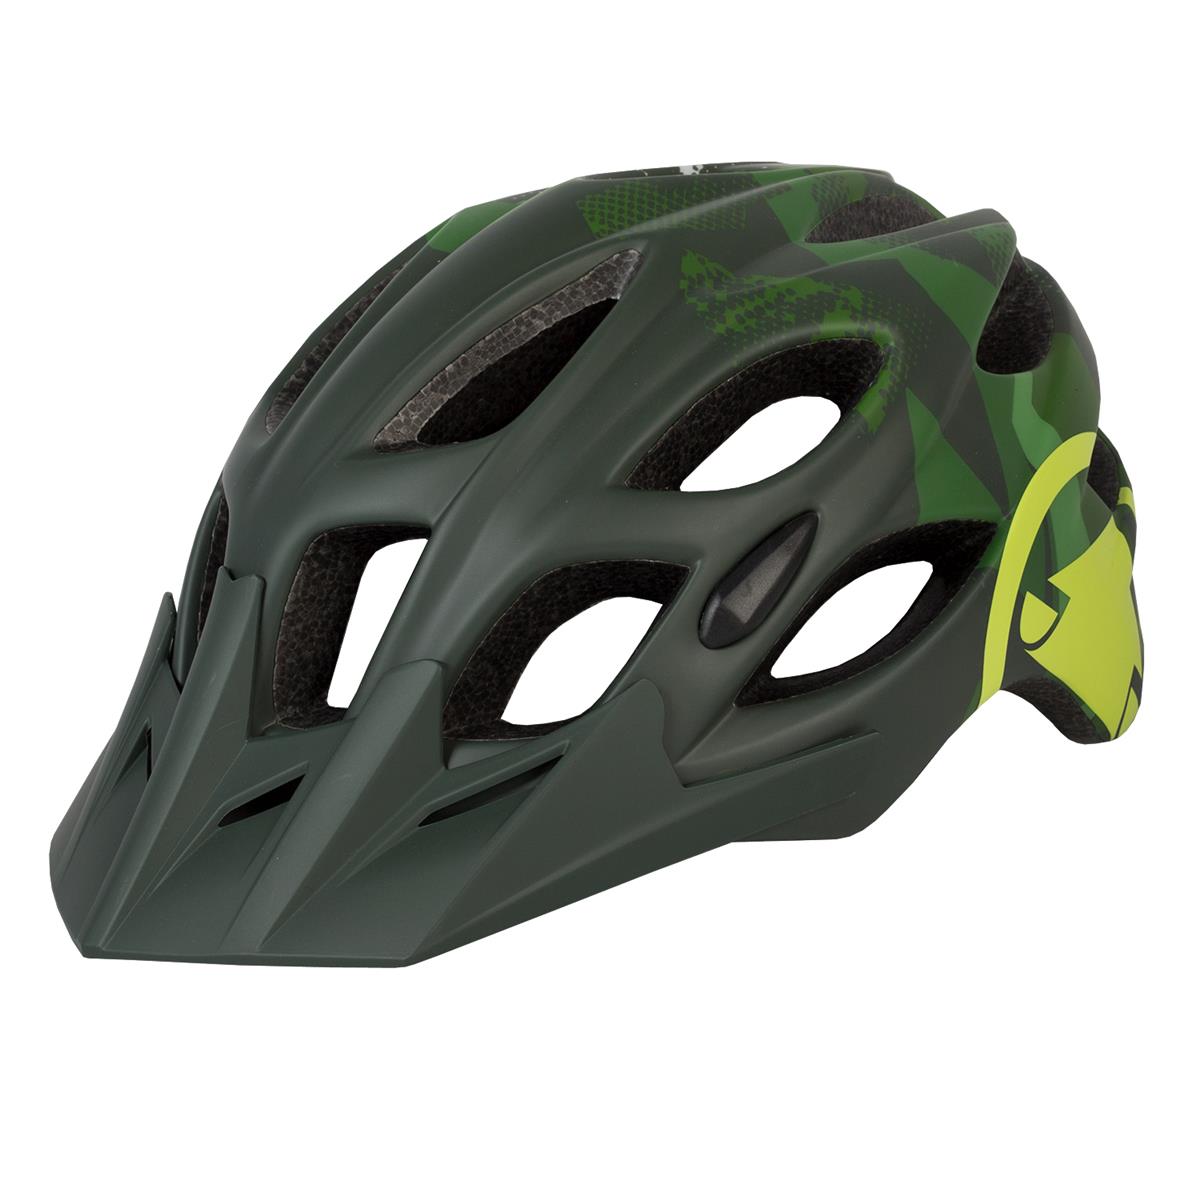 Hummvee helmet Khaki Green size S/M (51-56cm)